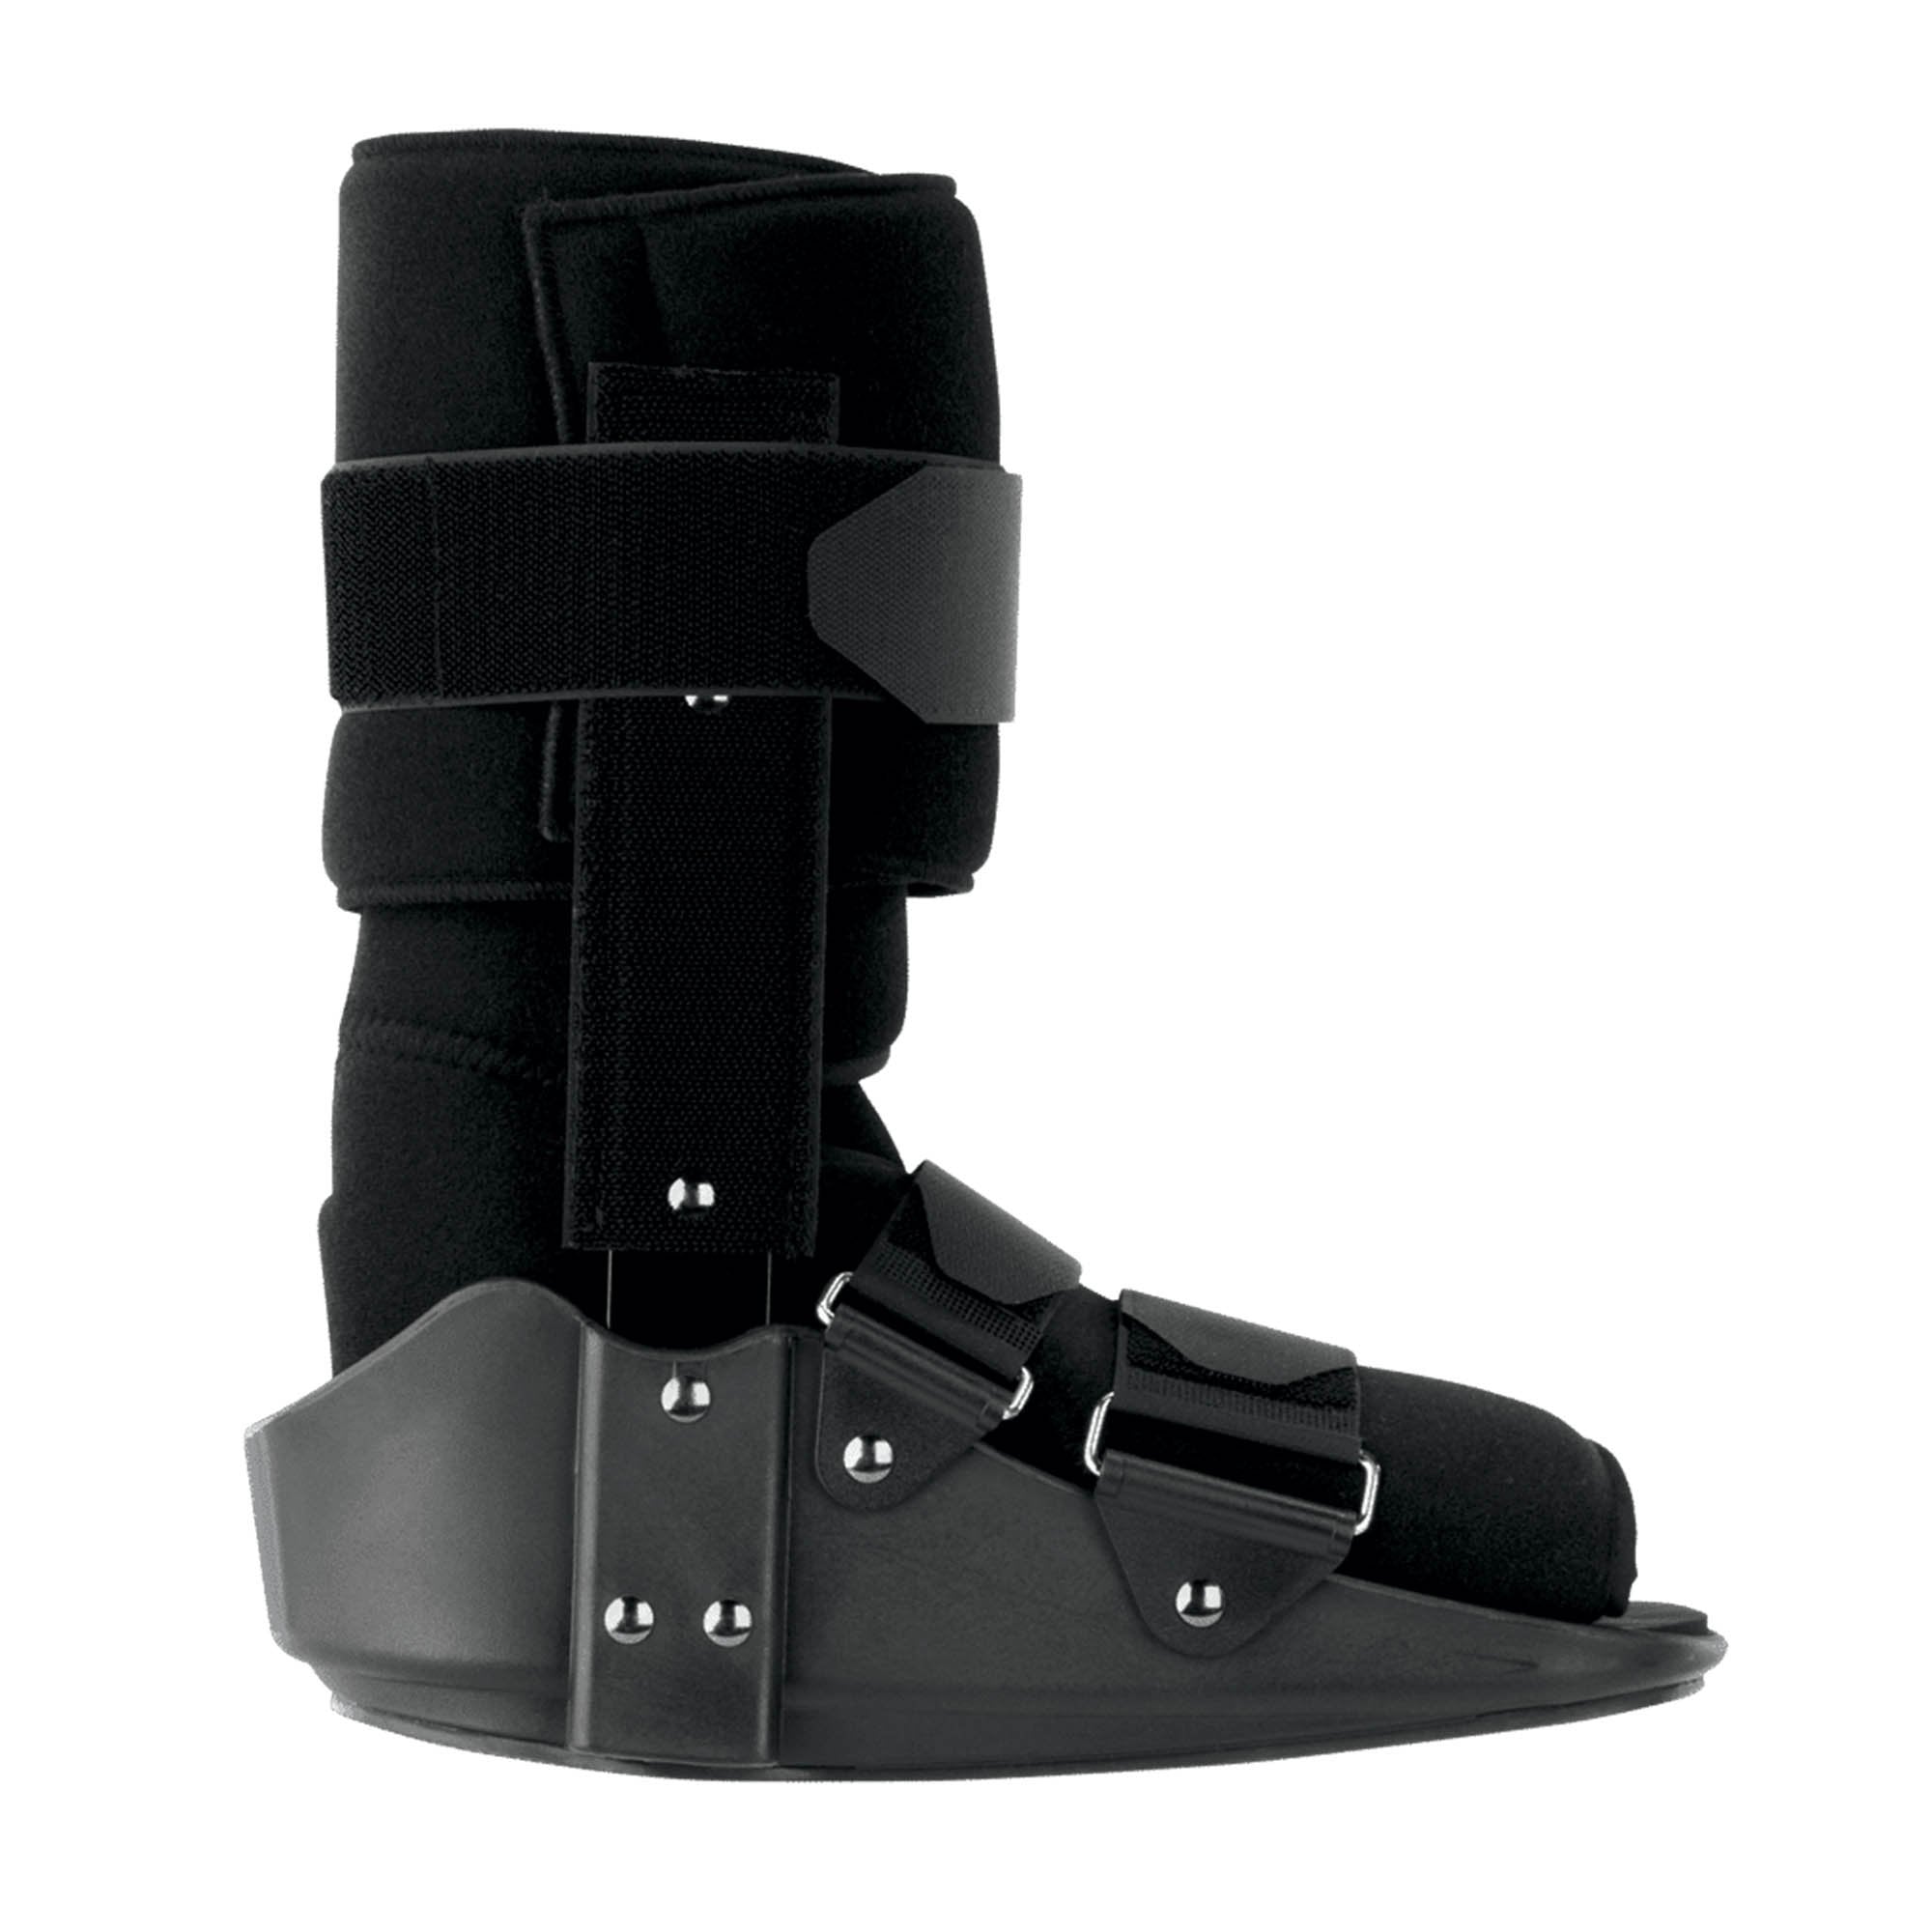 Walker Boot Breg® Fixed Non-Pneumatic Medium Left or Right Foot Adult